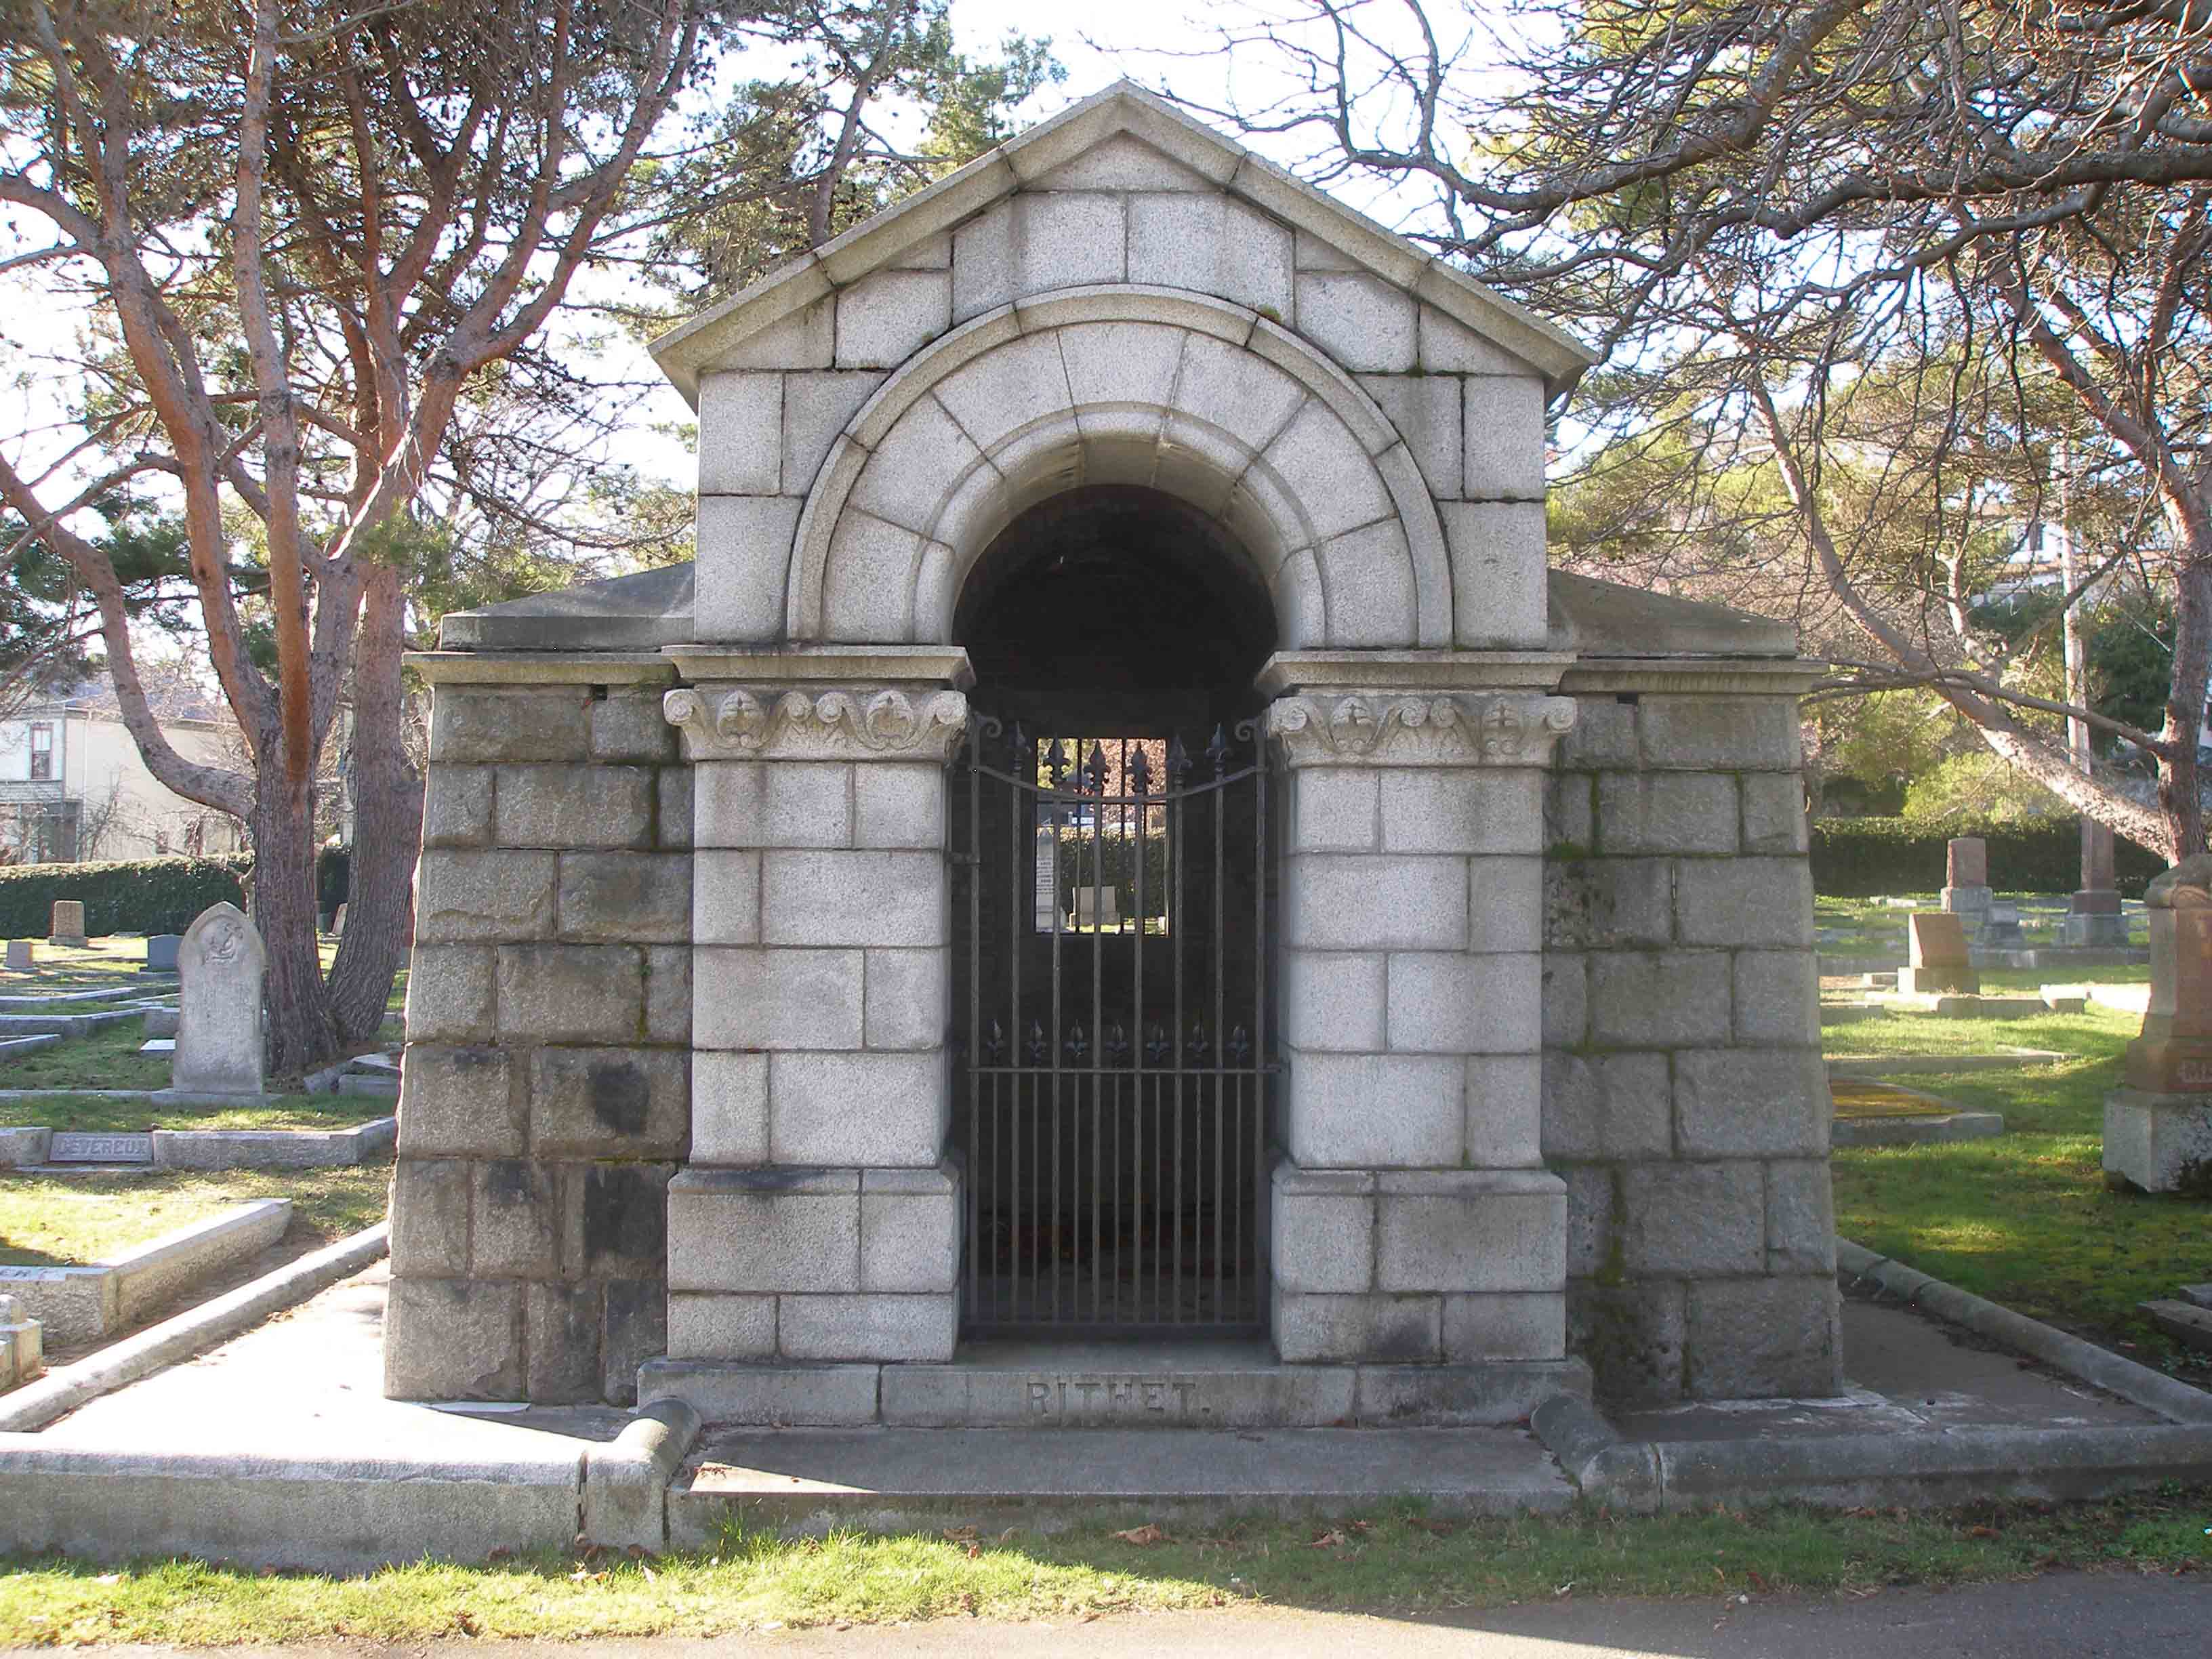 Robert Paterson Rithet mausoleum, Ross Bay Cemetery, Victoria, B.C.